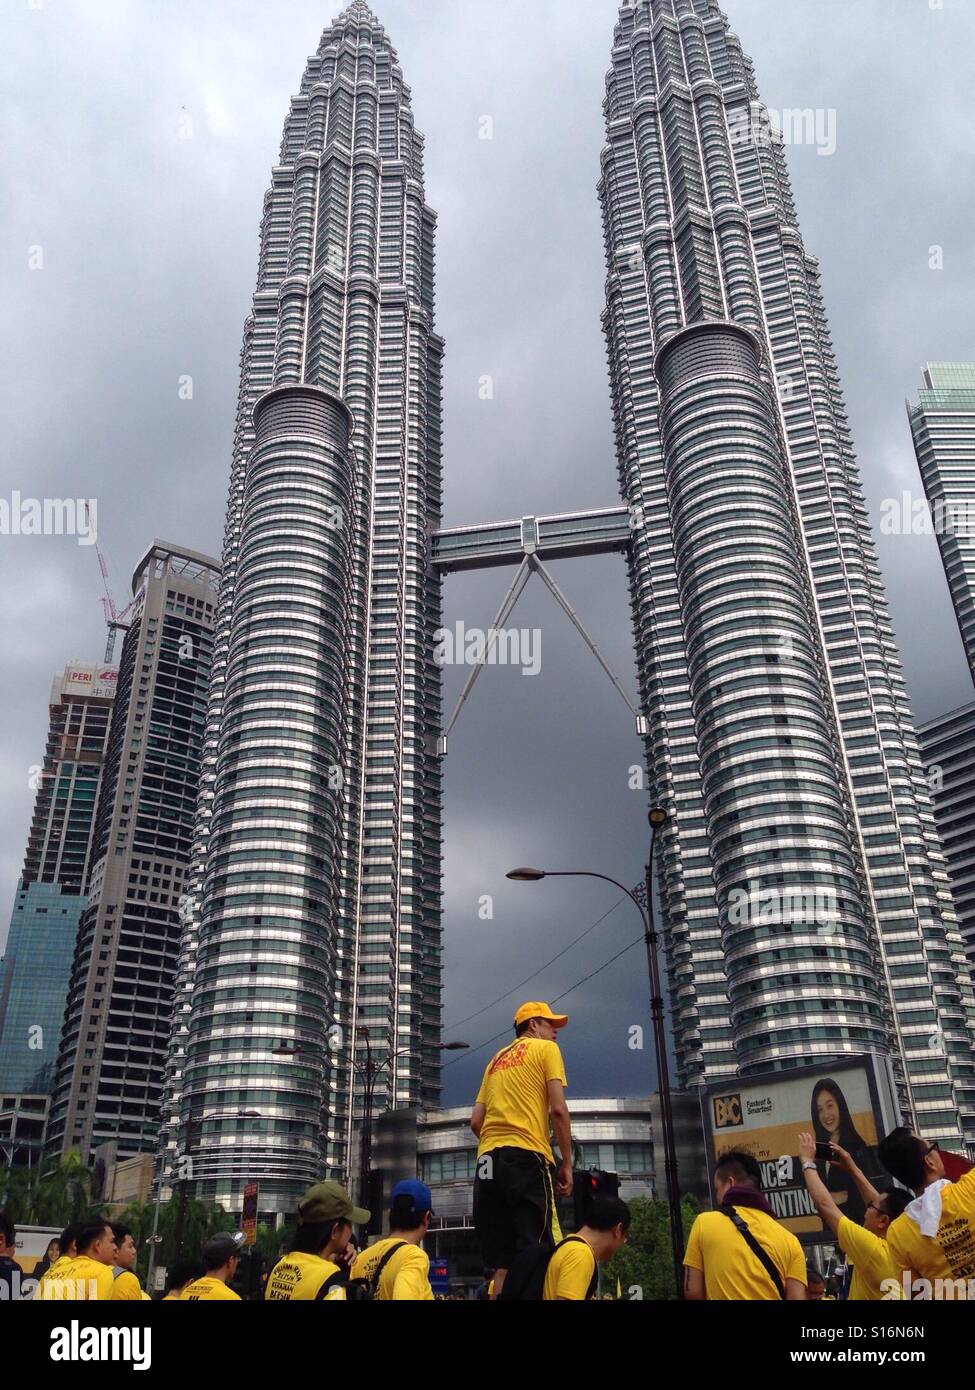 Malaysia Bersih 5 demand for clean electoral process gathered around Petronas Twin Towers Stock Photo